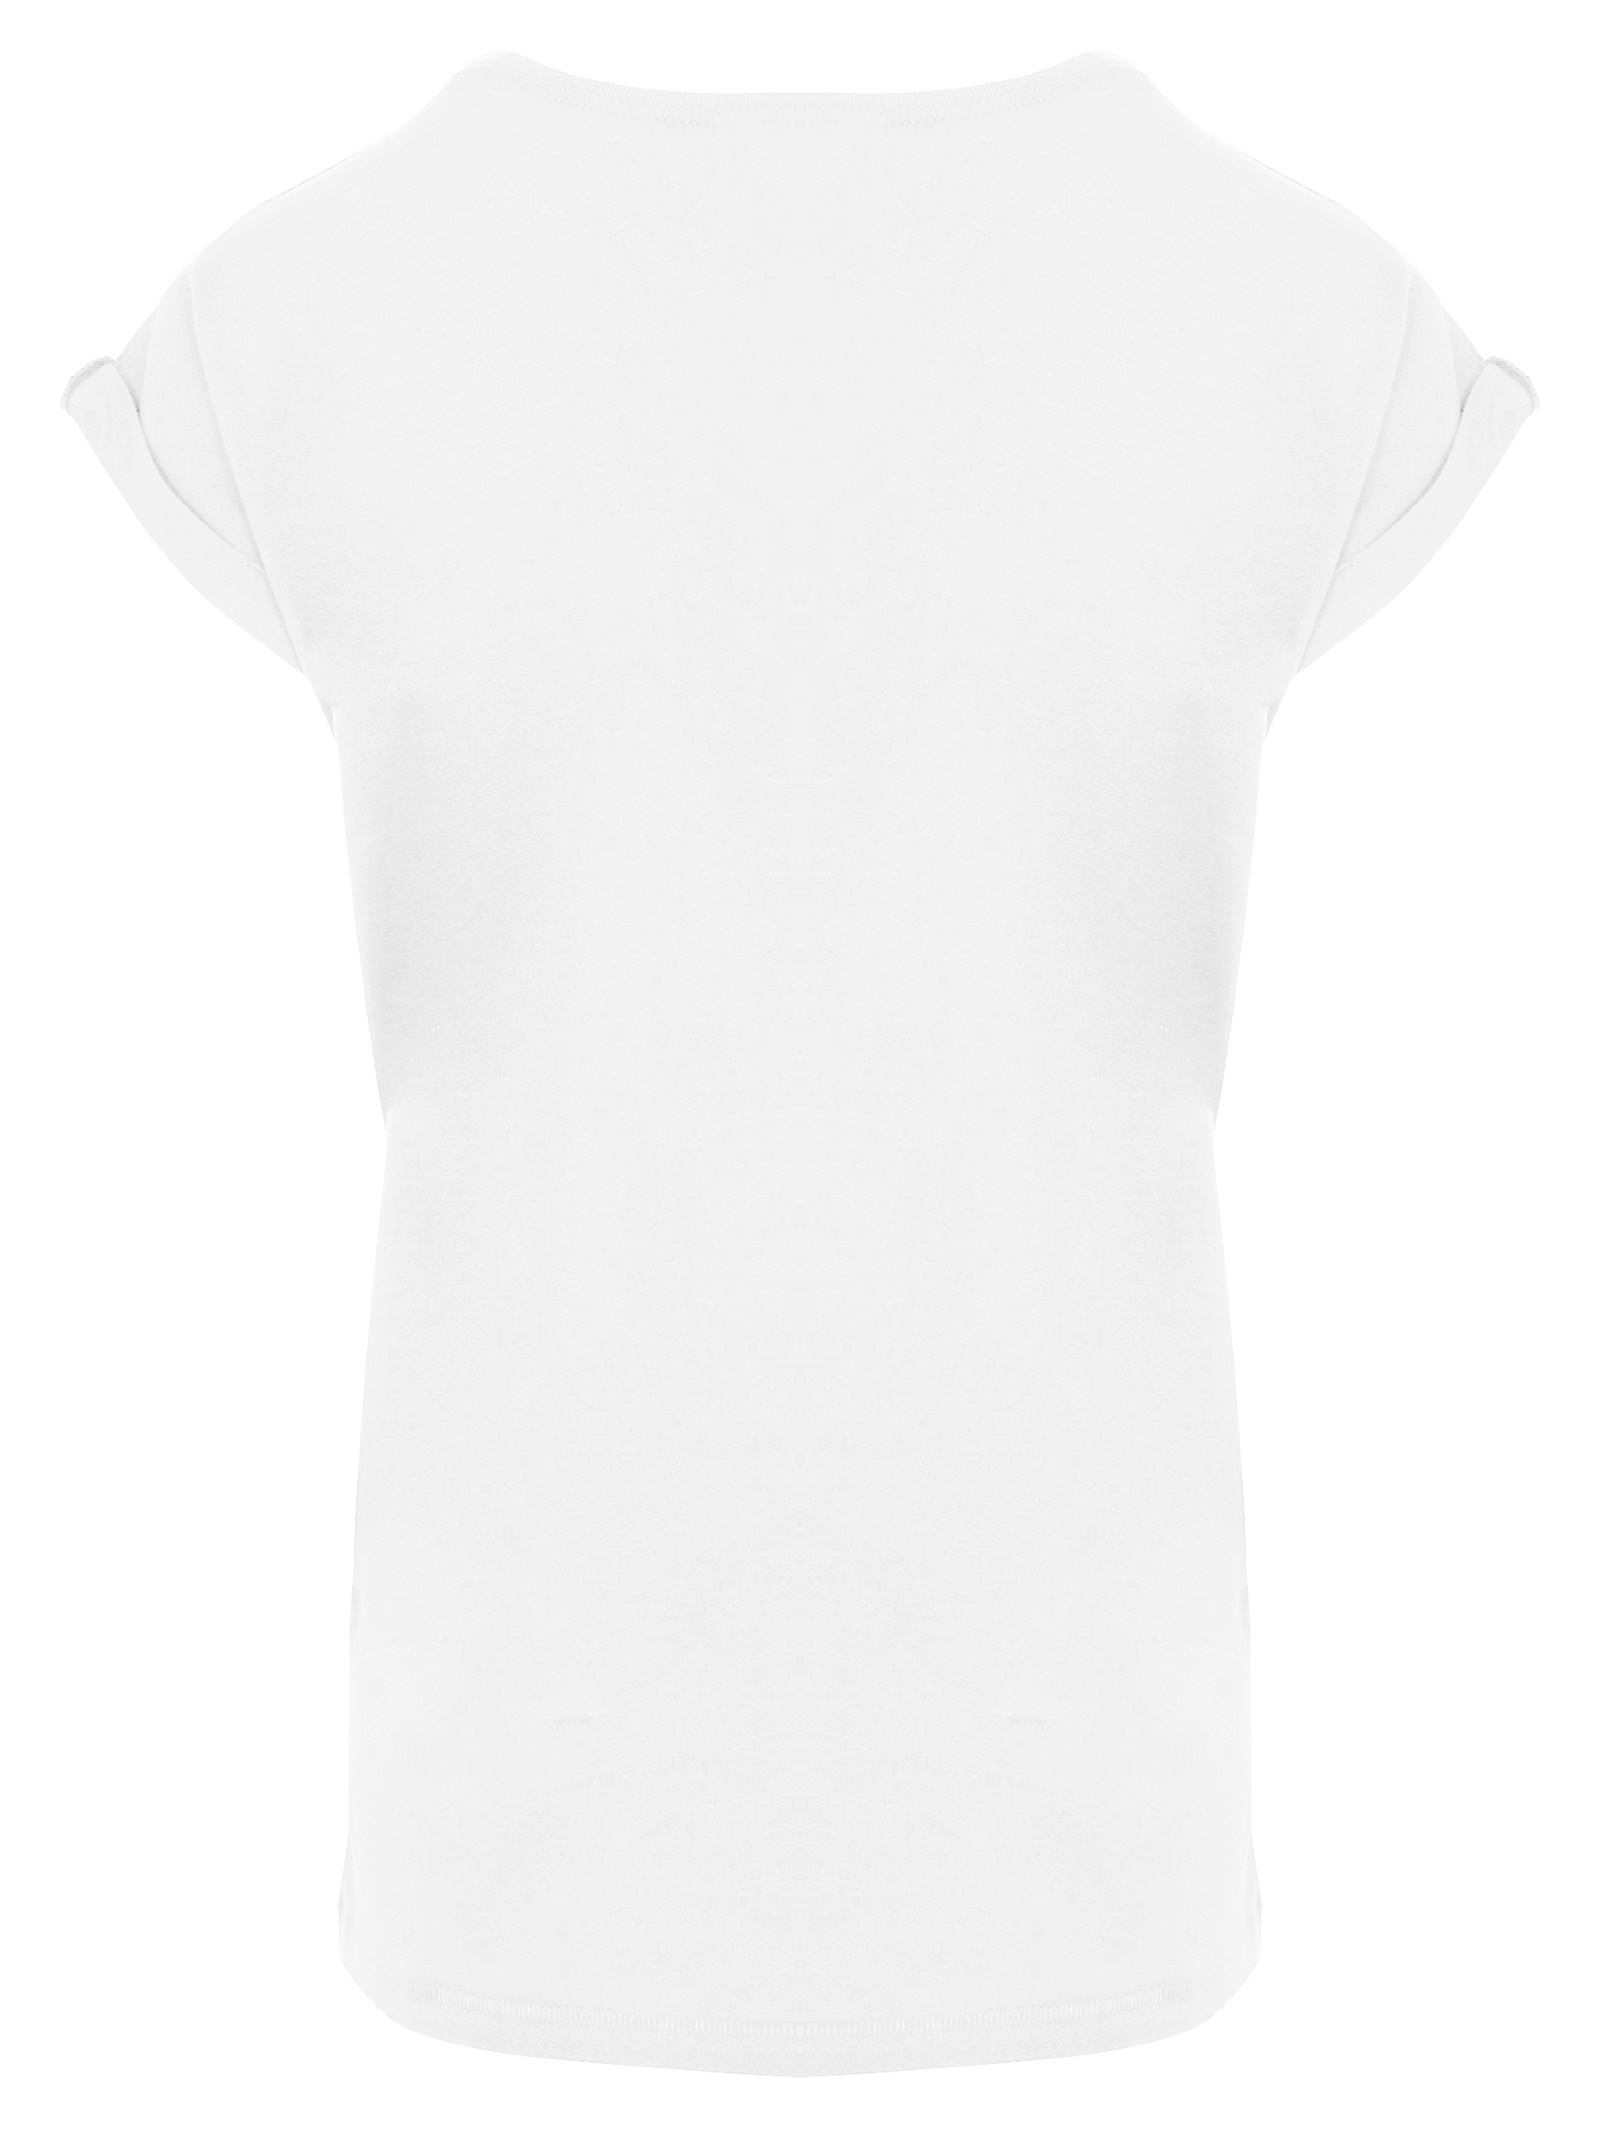 F4NT4STIC T-Shirt Motorhead England in Weiß 